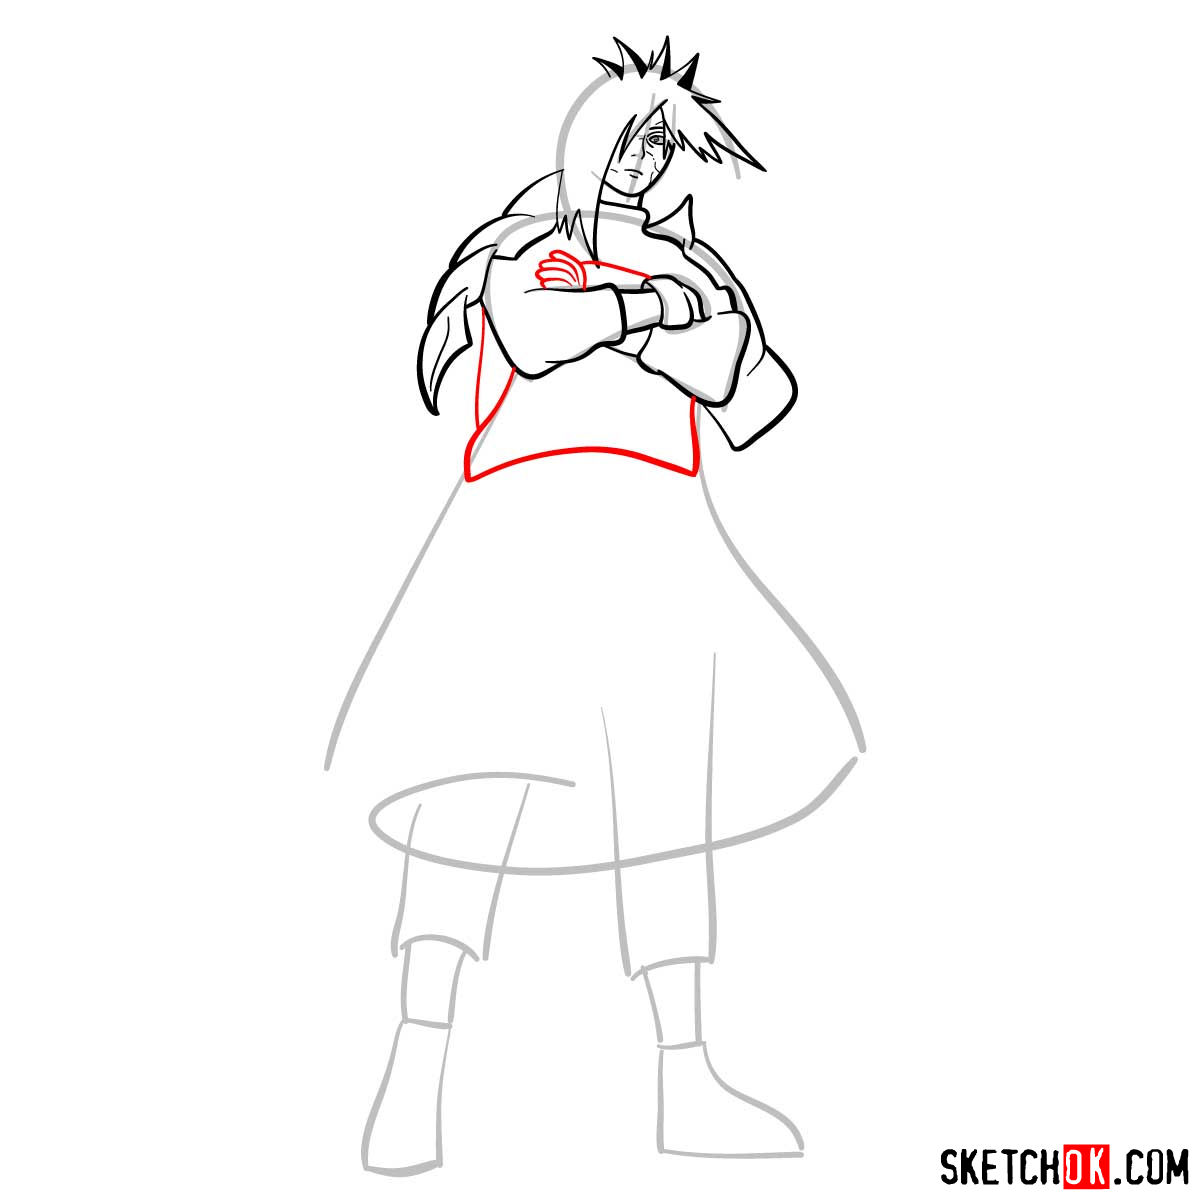 How to draw Madara Uchiha from Naruto anime - step 09